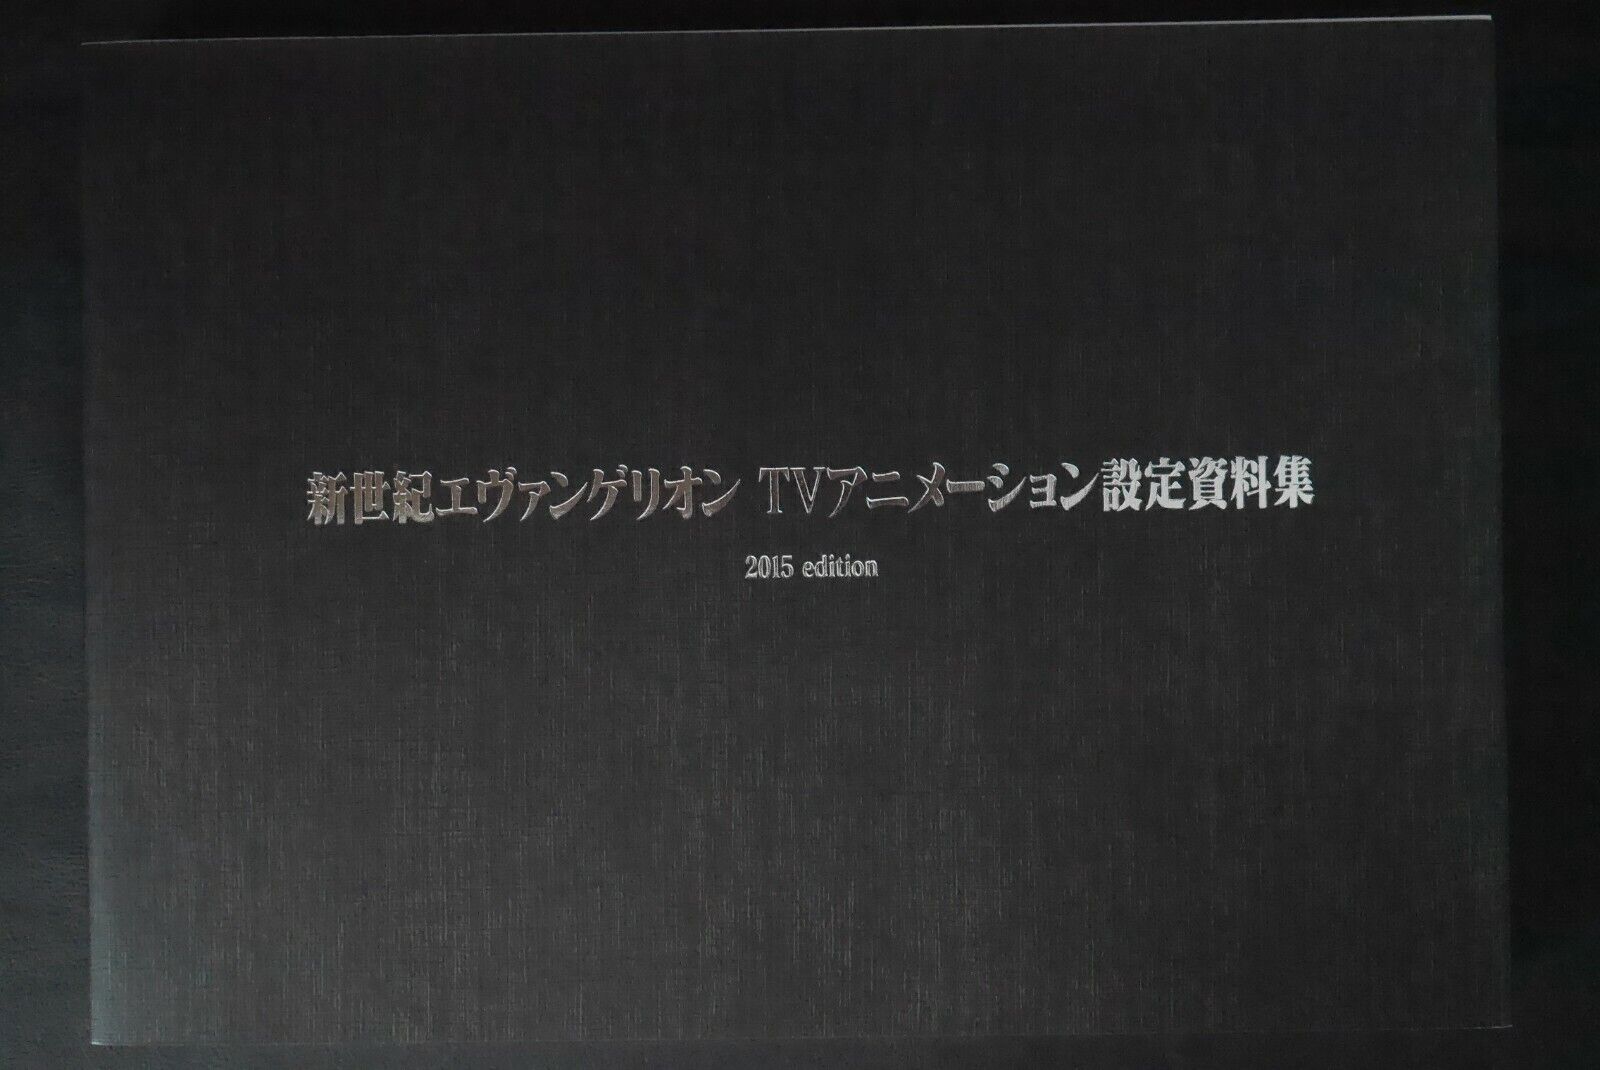 JAPAN Neon Genesis Evangelion TV Animation Settei Shiryoushuu 2015 Edition